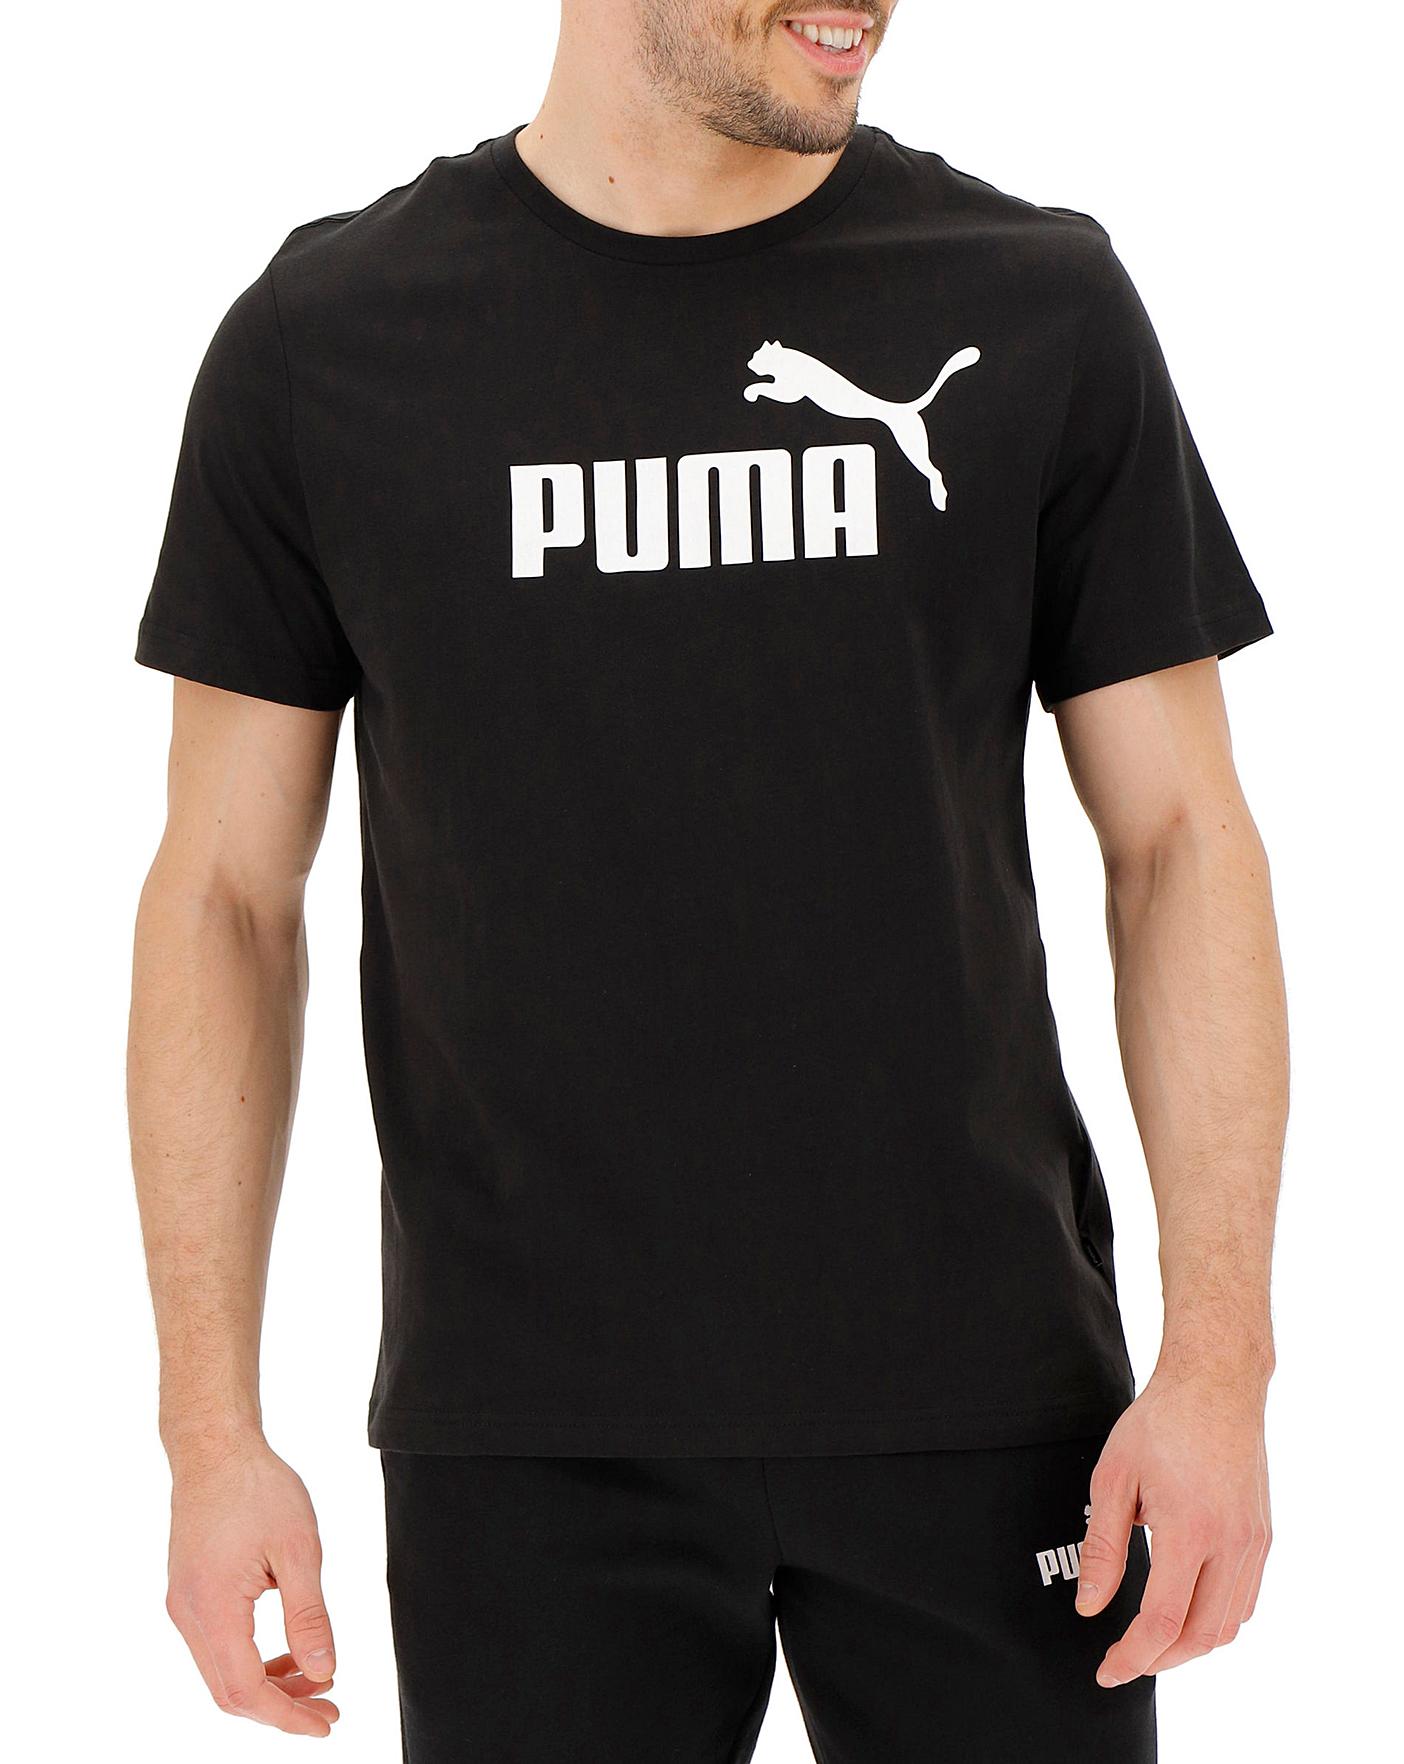 t shirt of puma